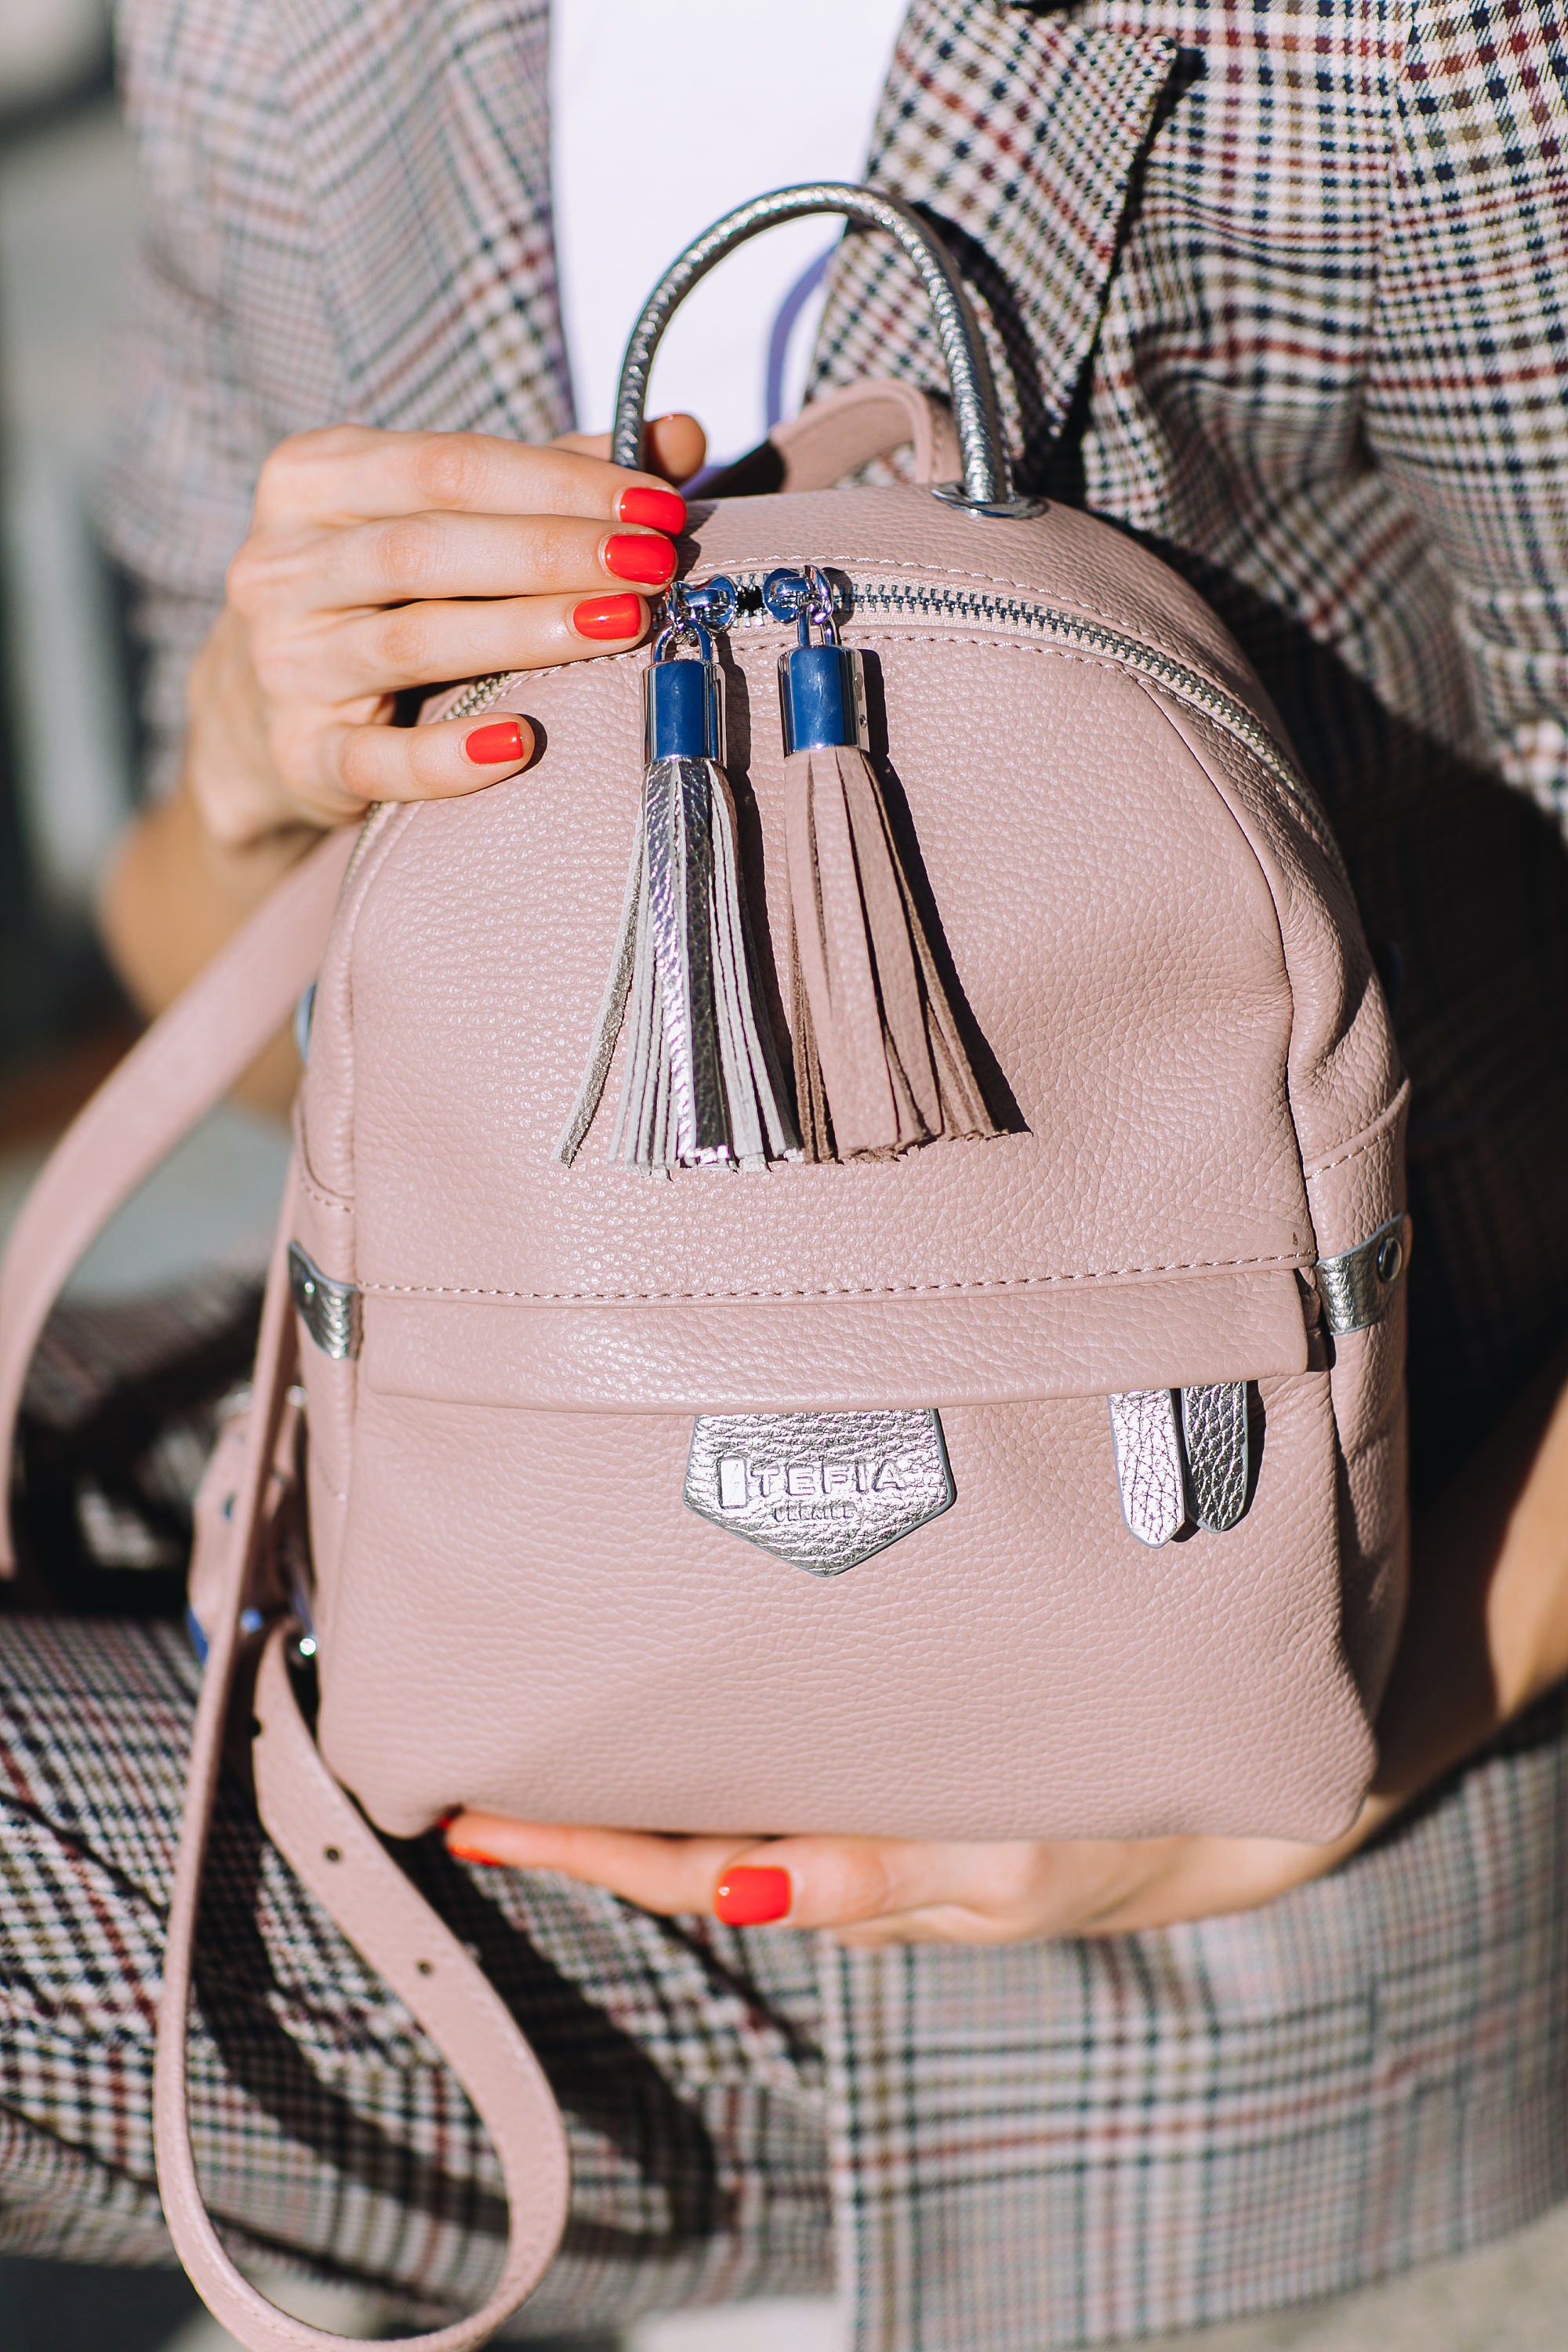 Victoria's Secret Mini Backpack Keychain / Bag Charm.